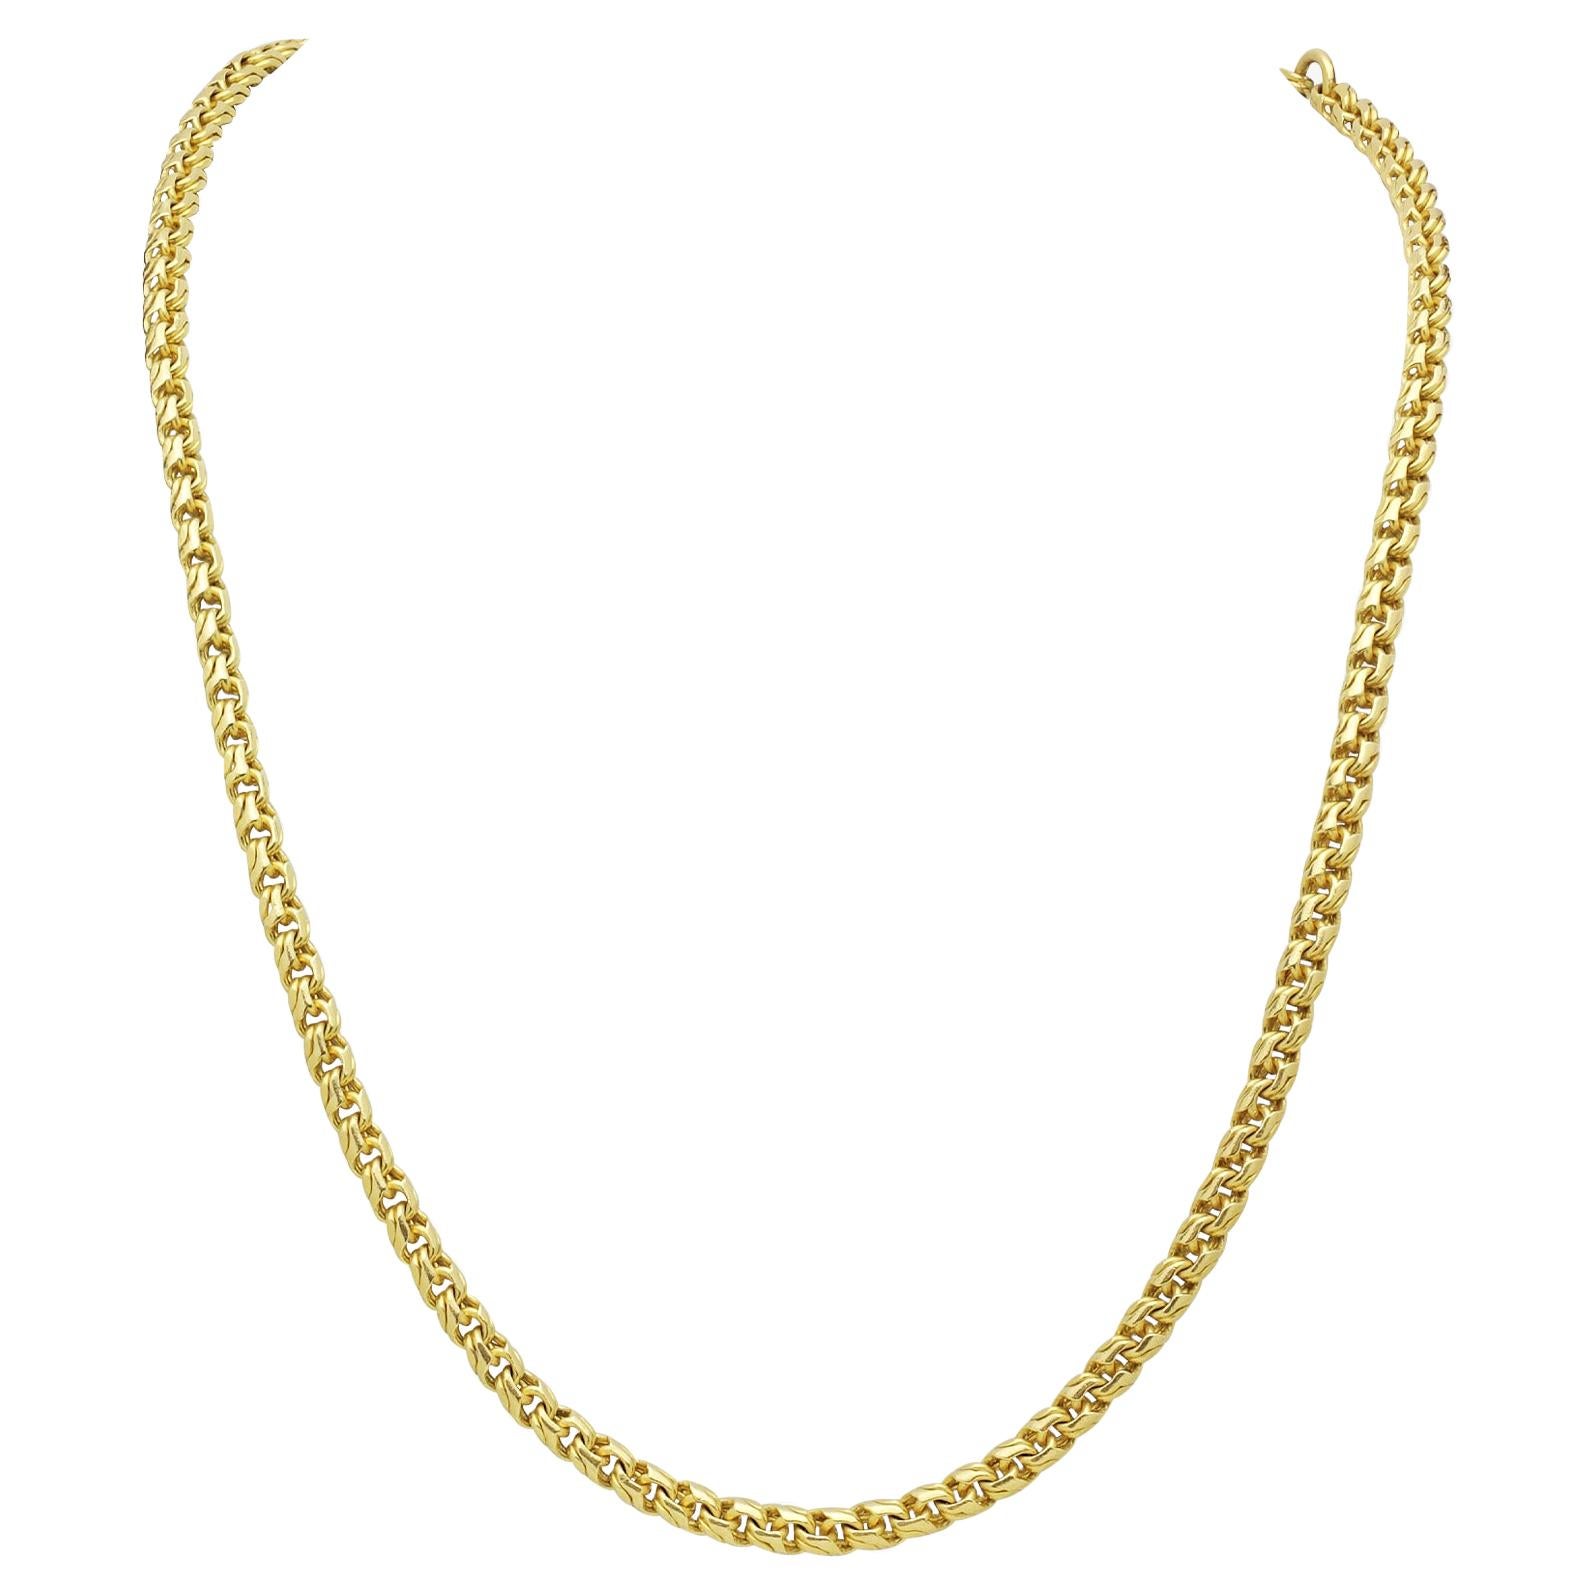 Long 23 Karat Gold Chain